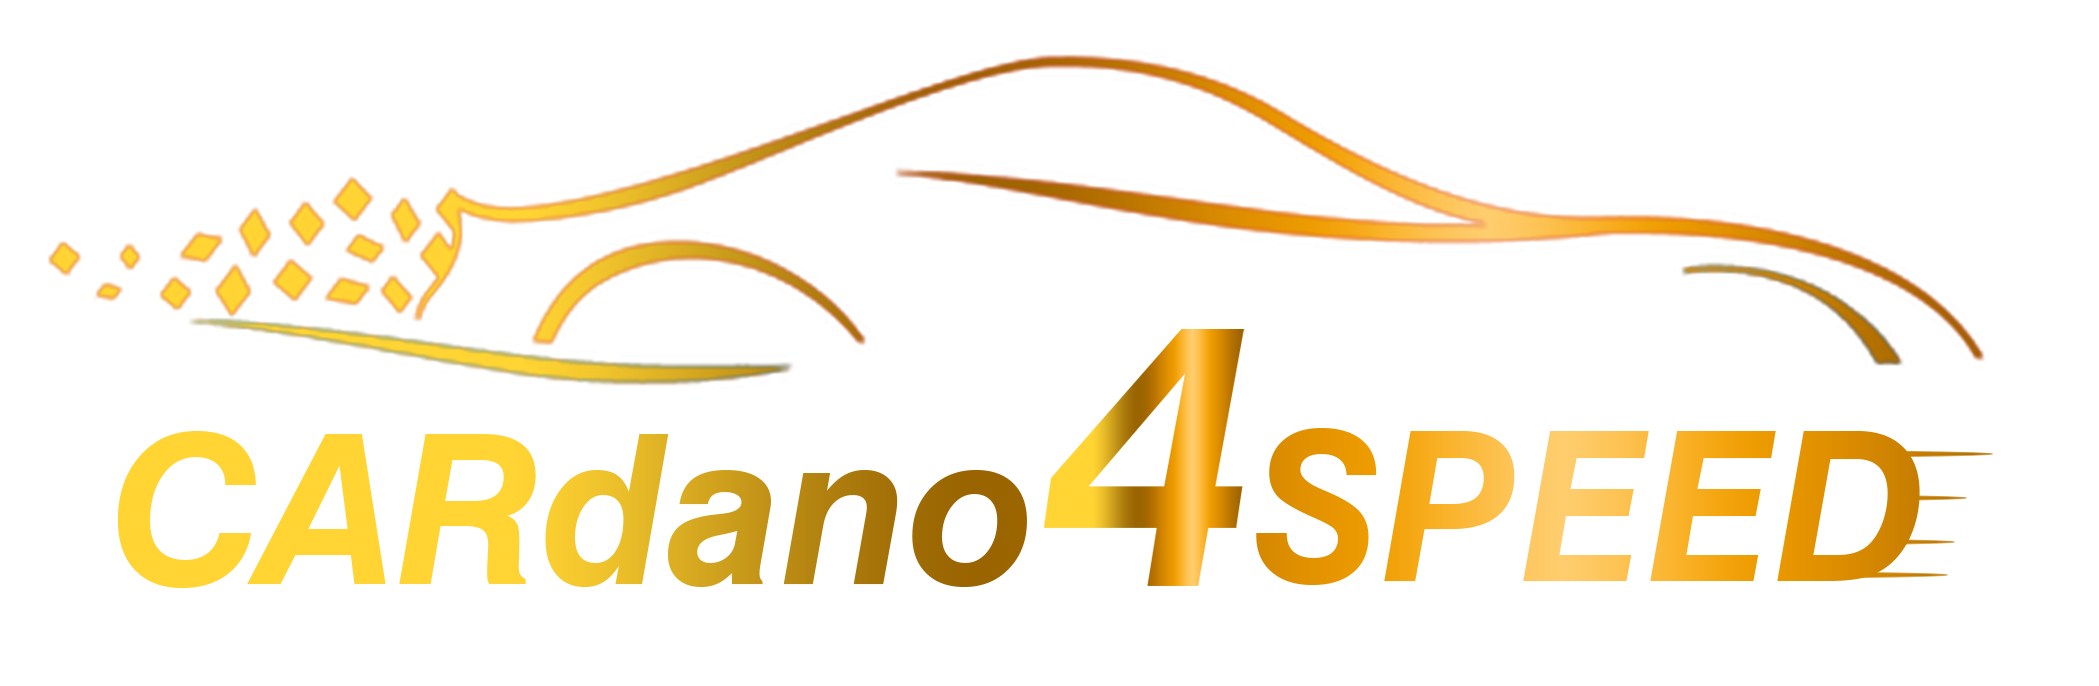 CARdano4SPEED logo